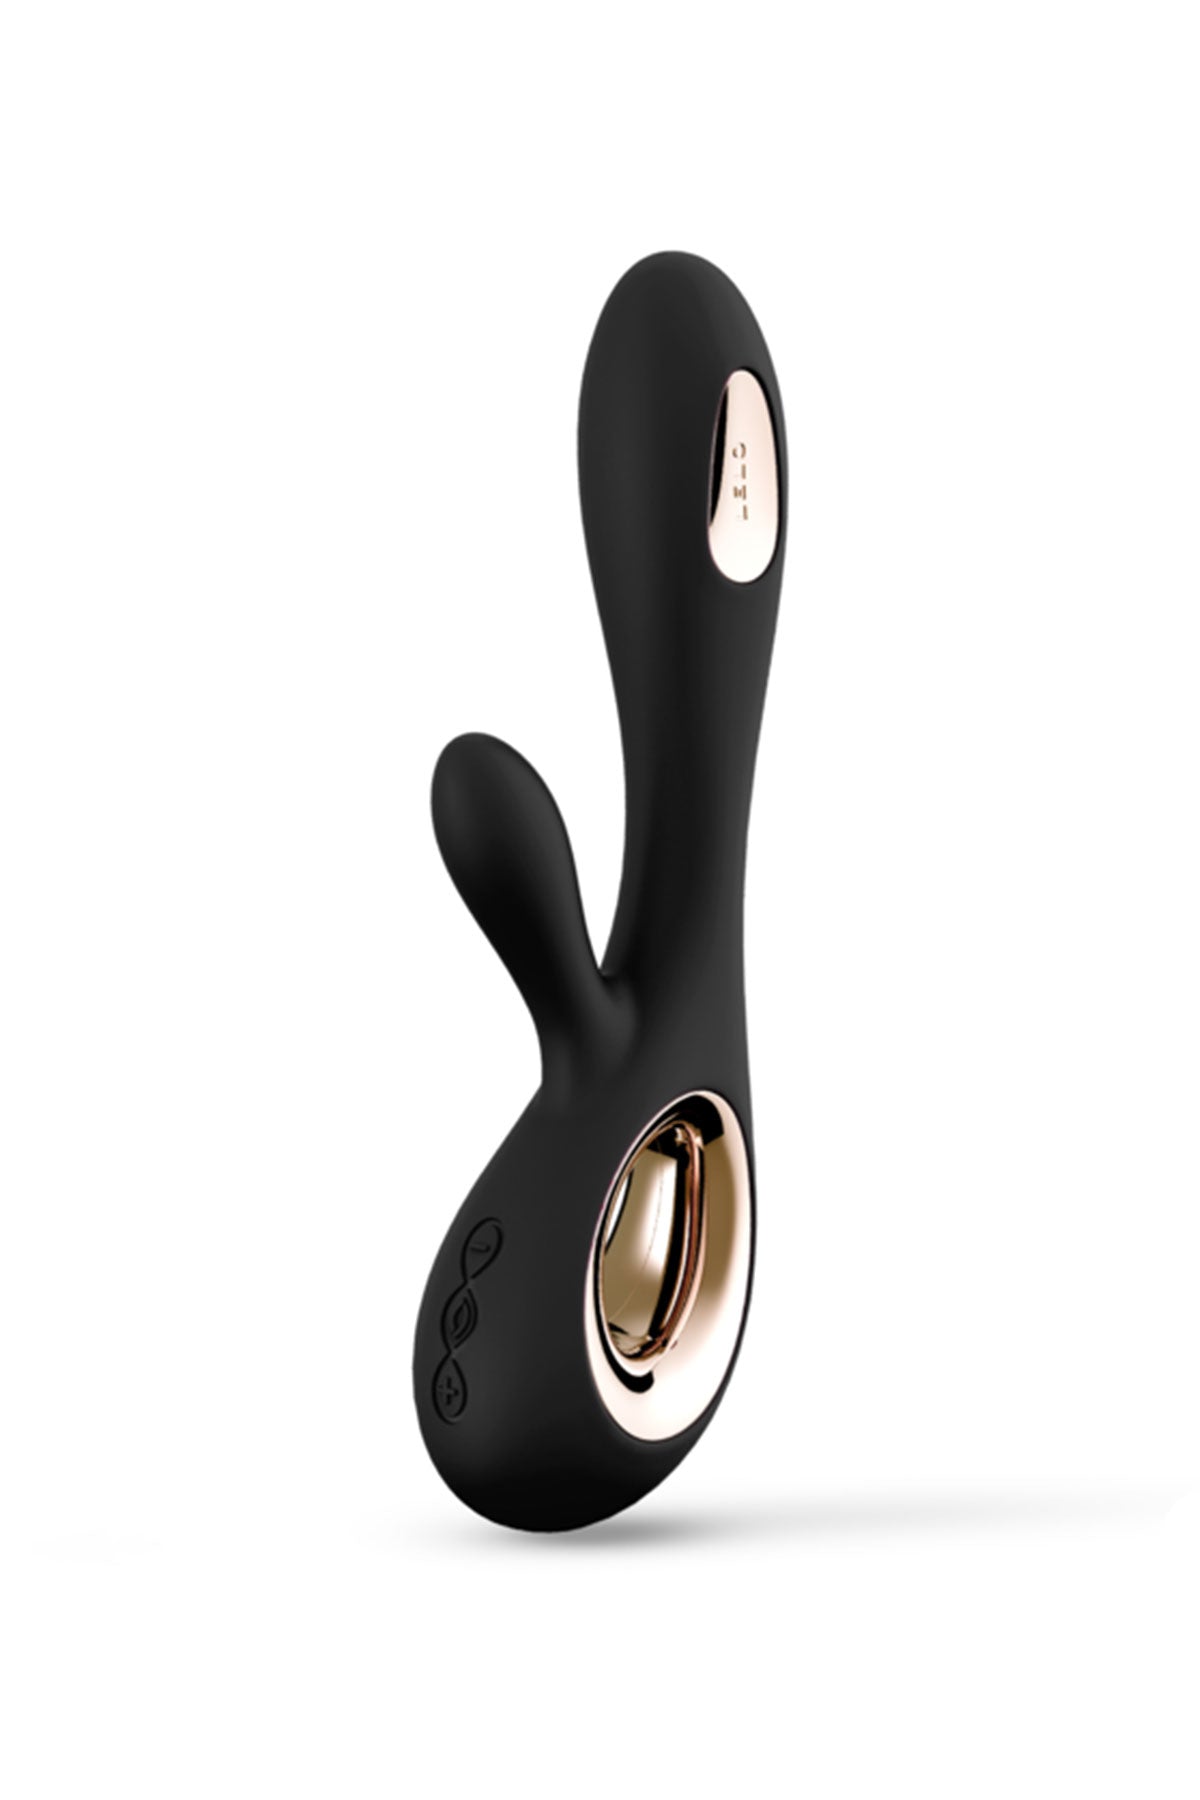 Black Soraya Wave Rabbit Vibrator by LELO 